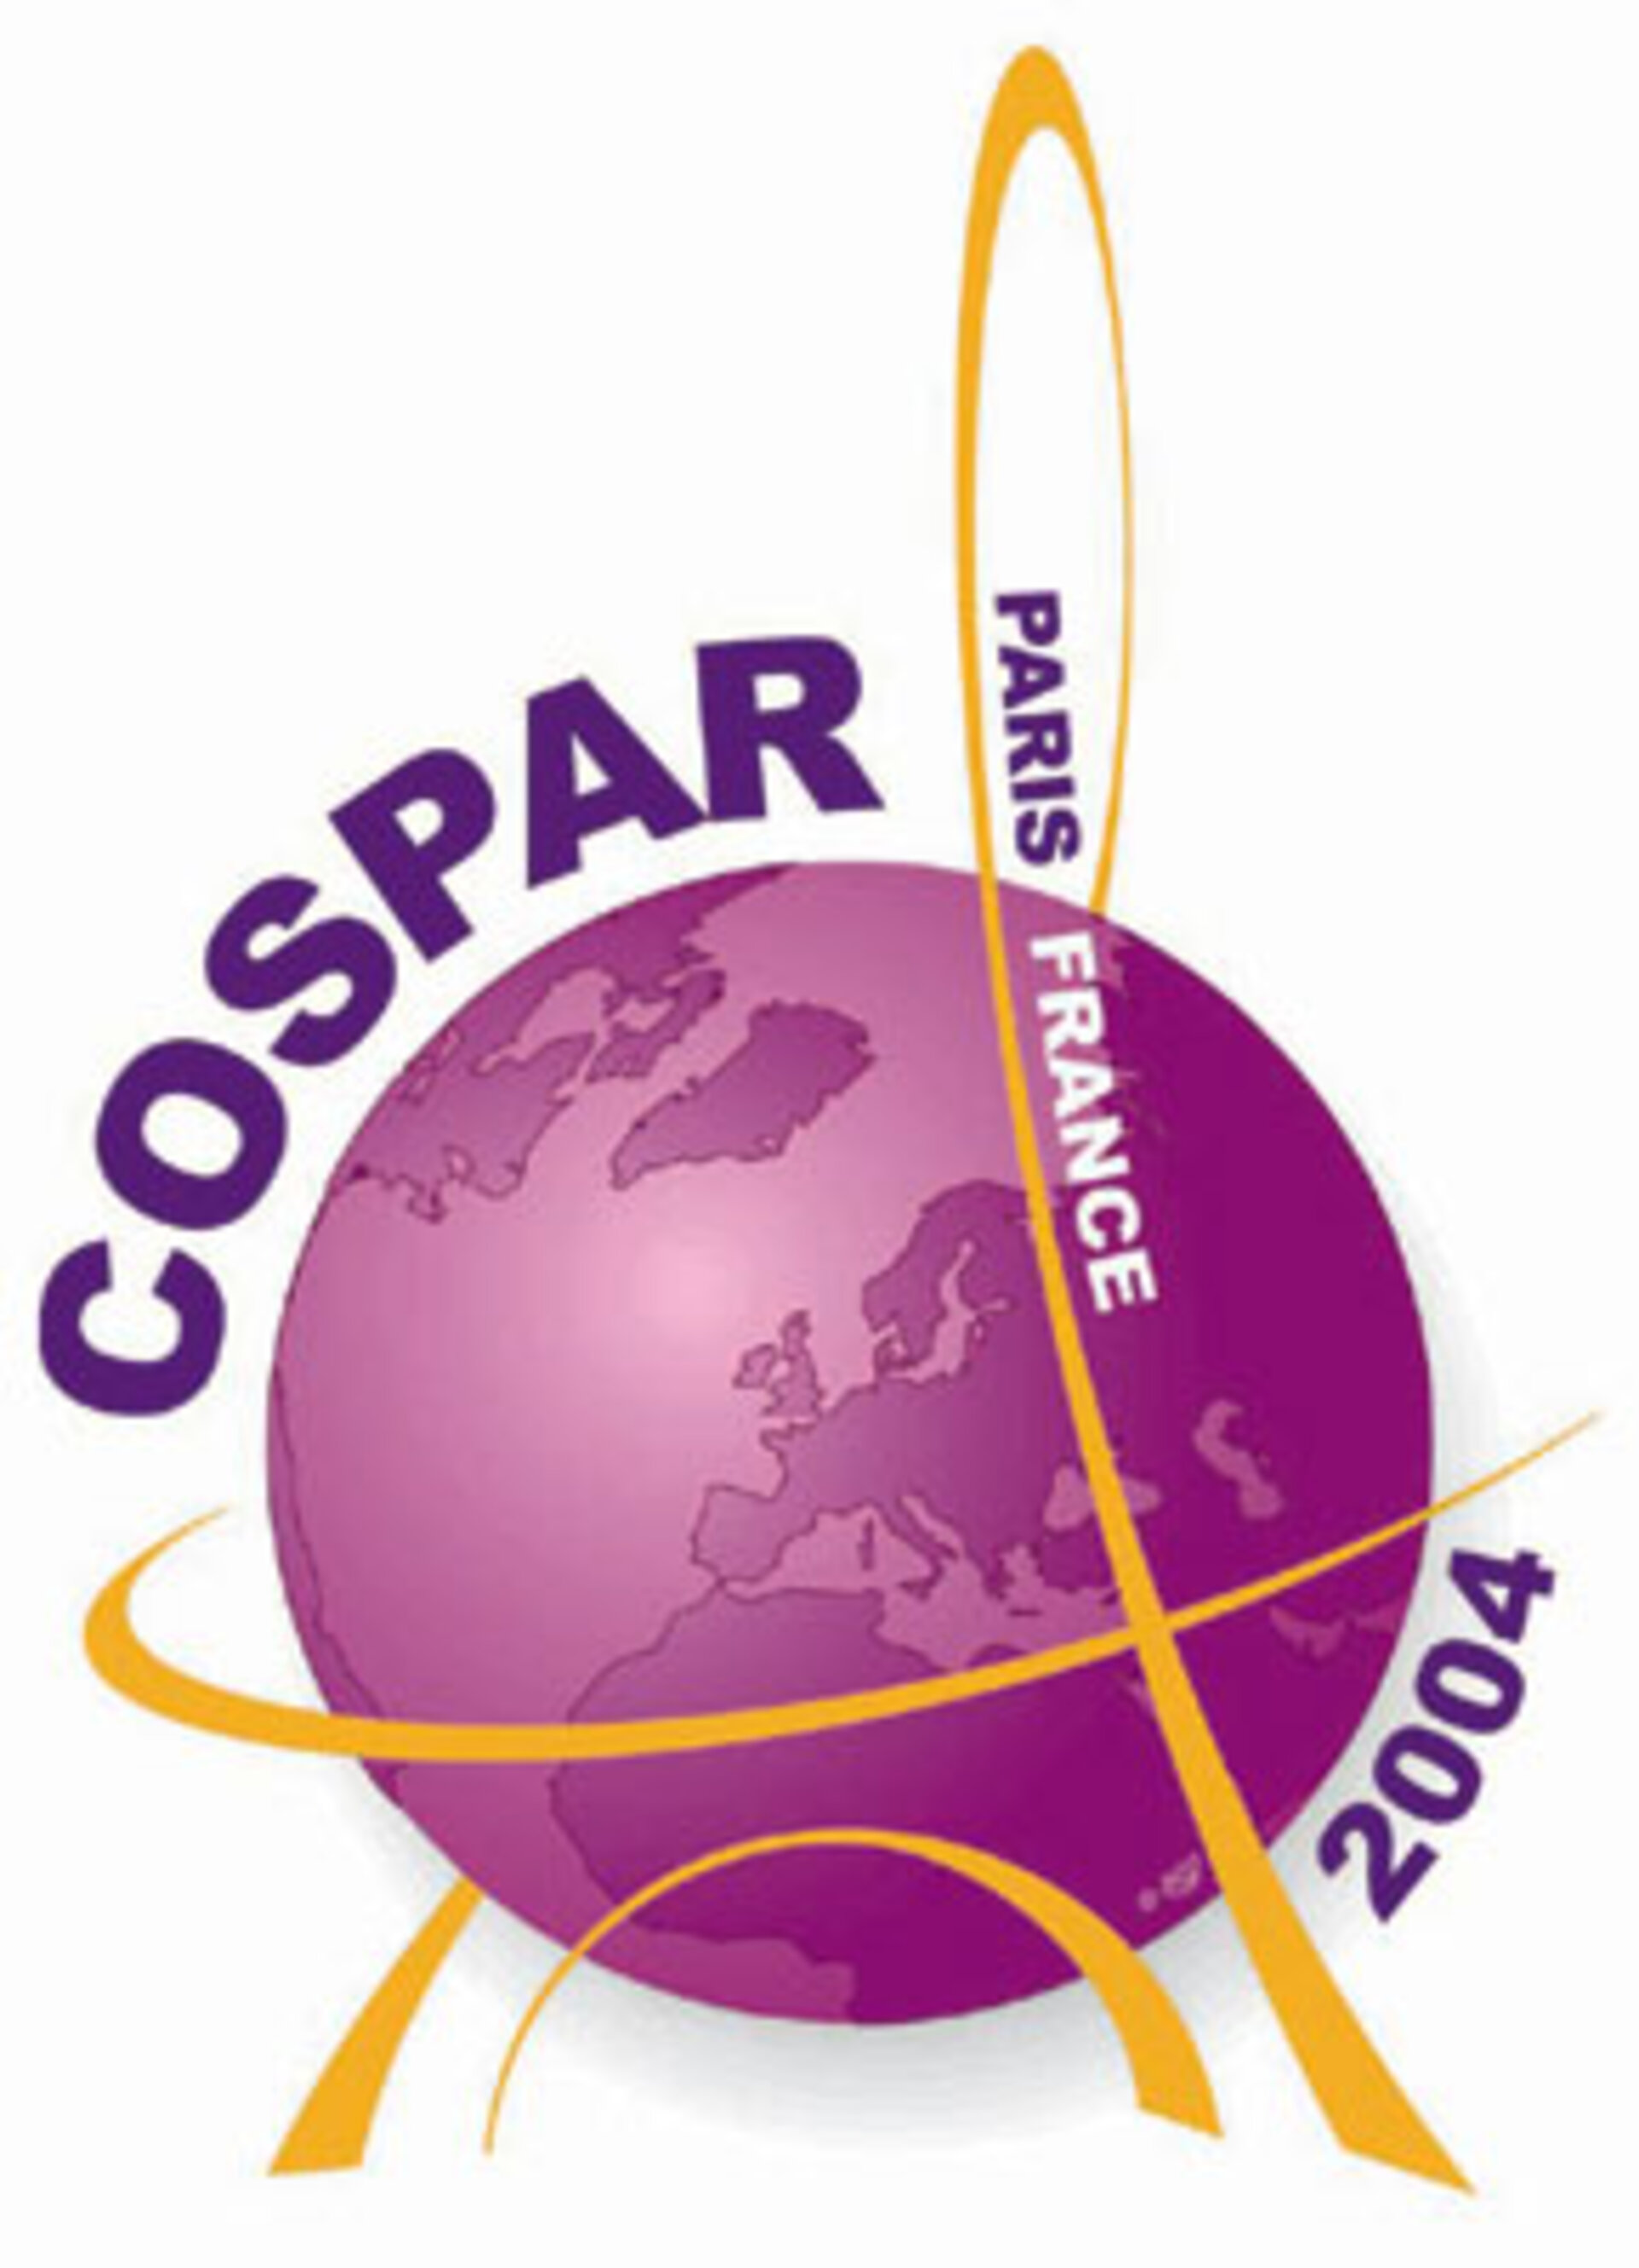 Cospar 2004 logo